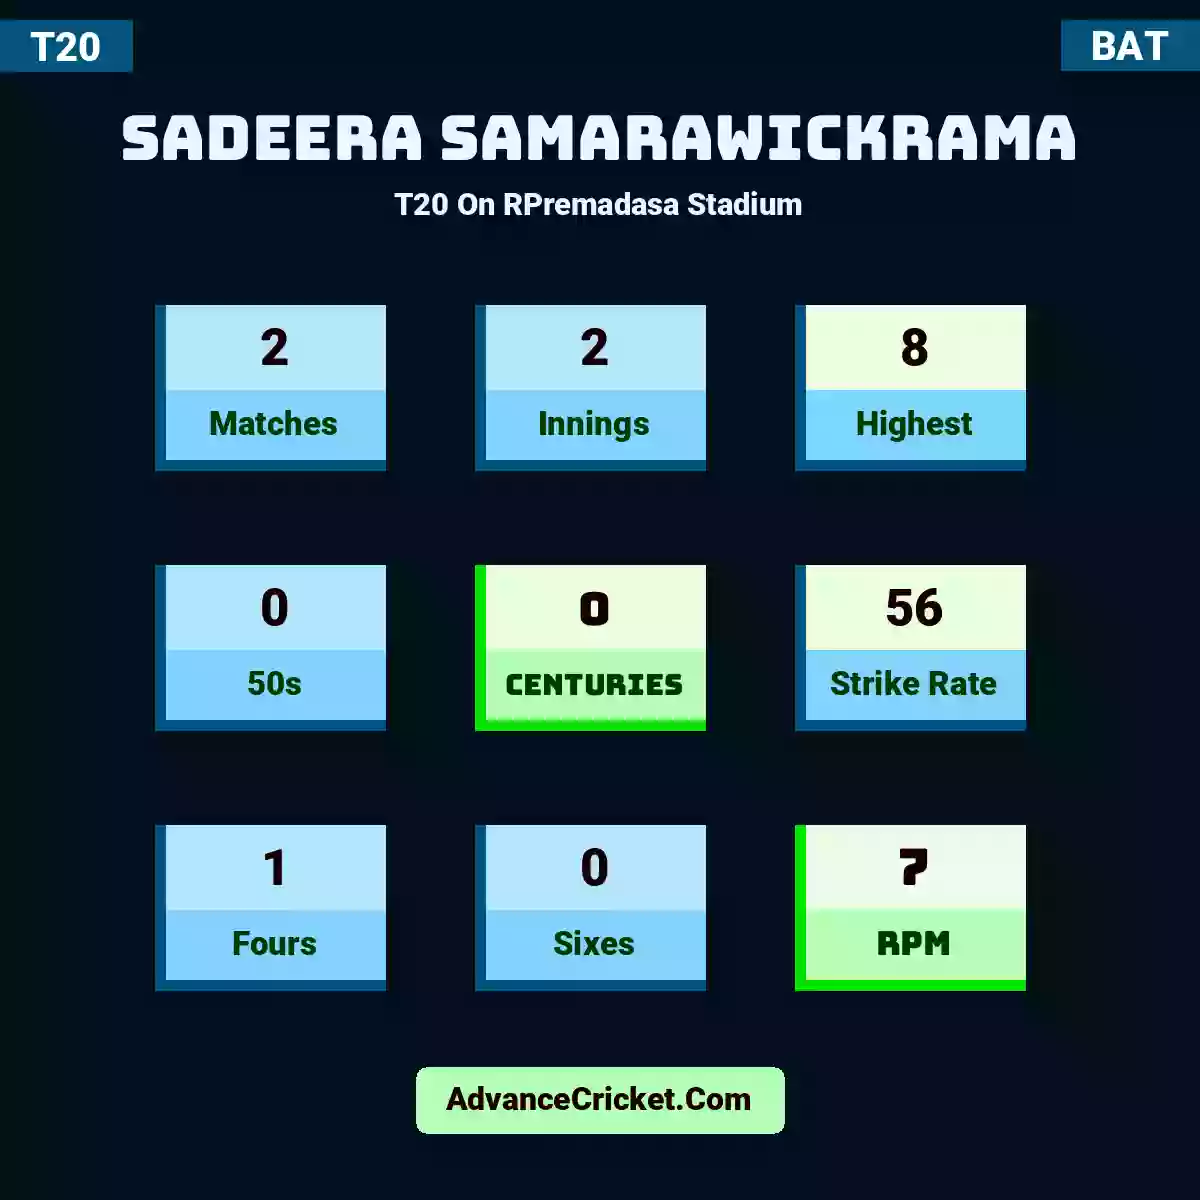 Sadeera Samarawickrama T20  On RPremadasa Stadium, Sadeera Samarawickrama played 2 matches, scored 8 runs as highest, 0 half-centuries, and 0 centuries, with a strike rate of 56. S.Samarawickrama hit 1 fours and 0 sixes, with an RPM of 7.